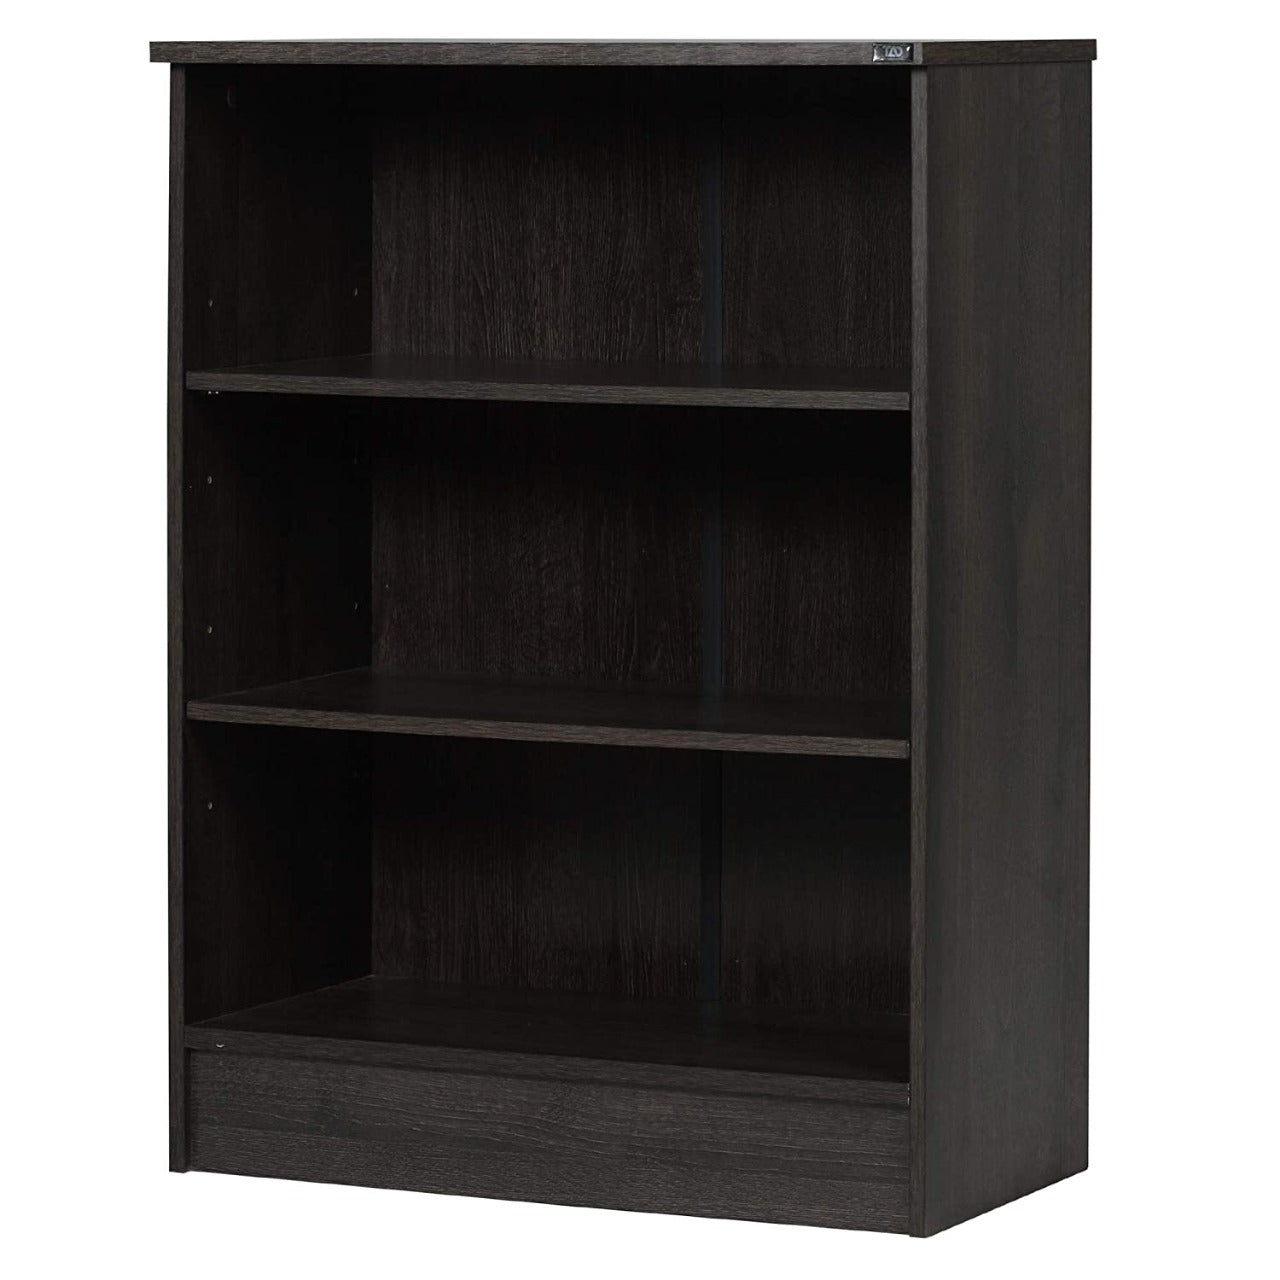 Bookshelf Black Wide 3-Shelf Bookcase